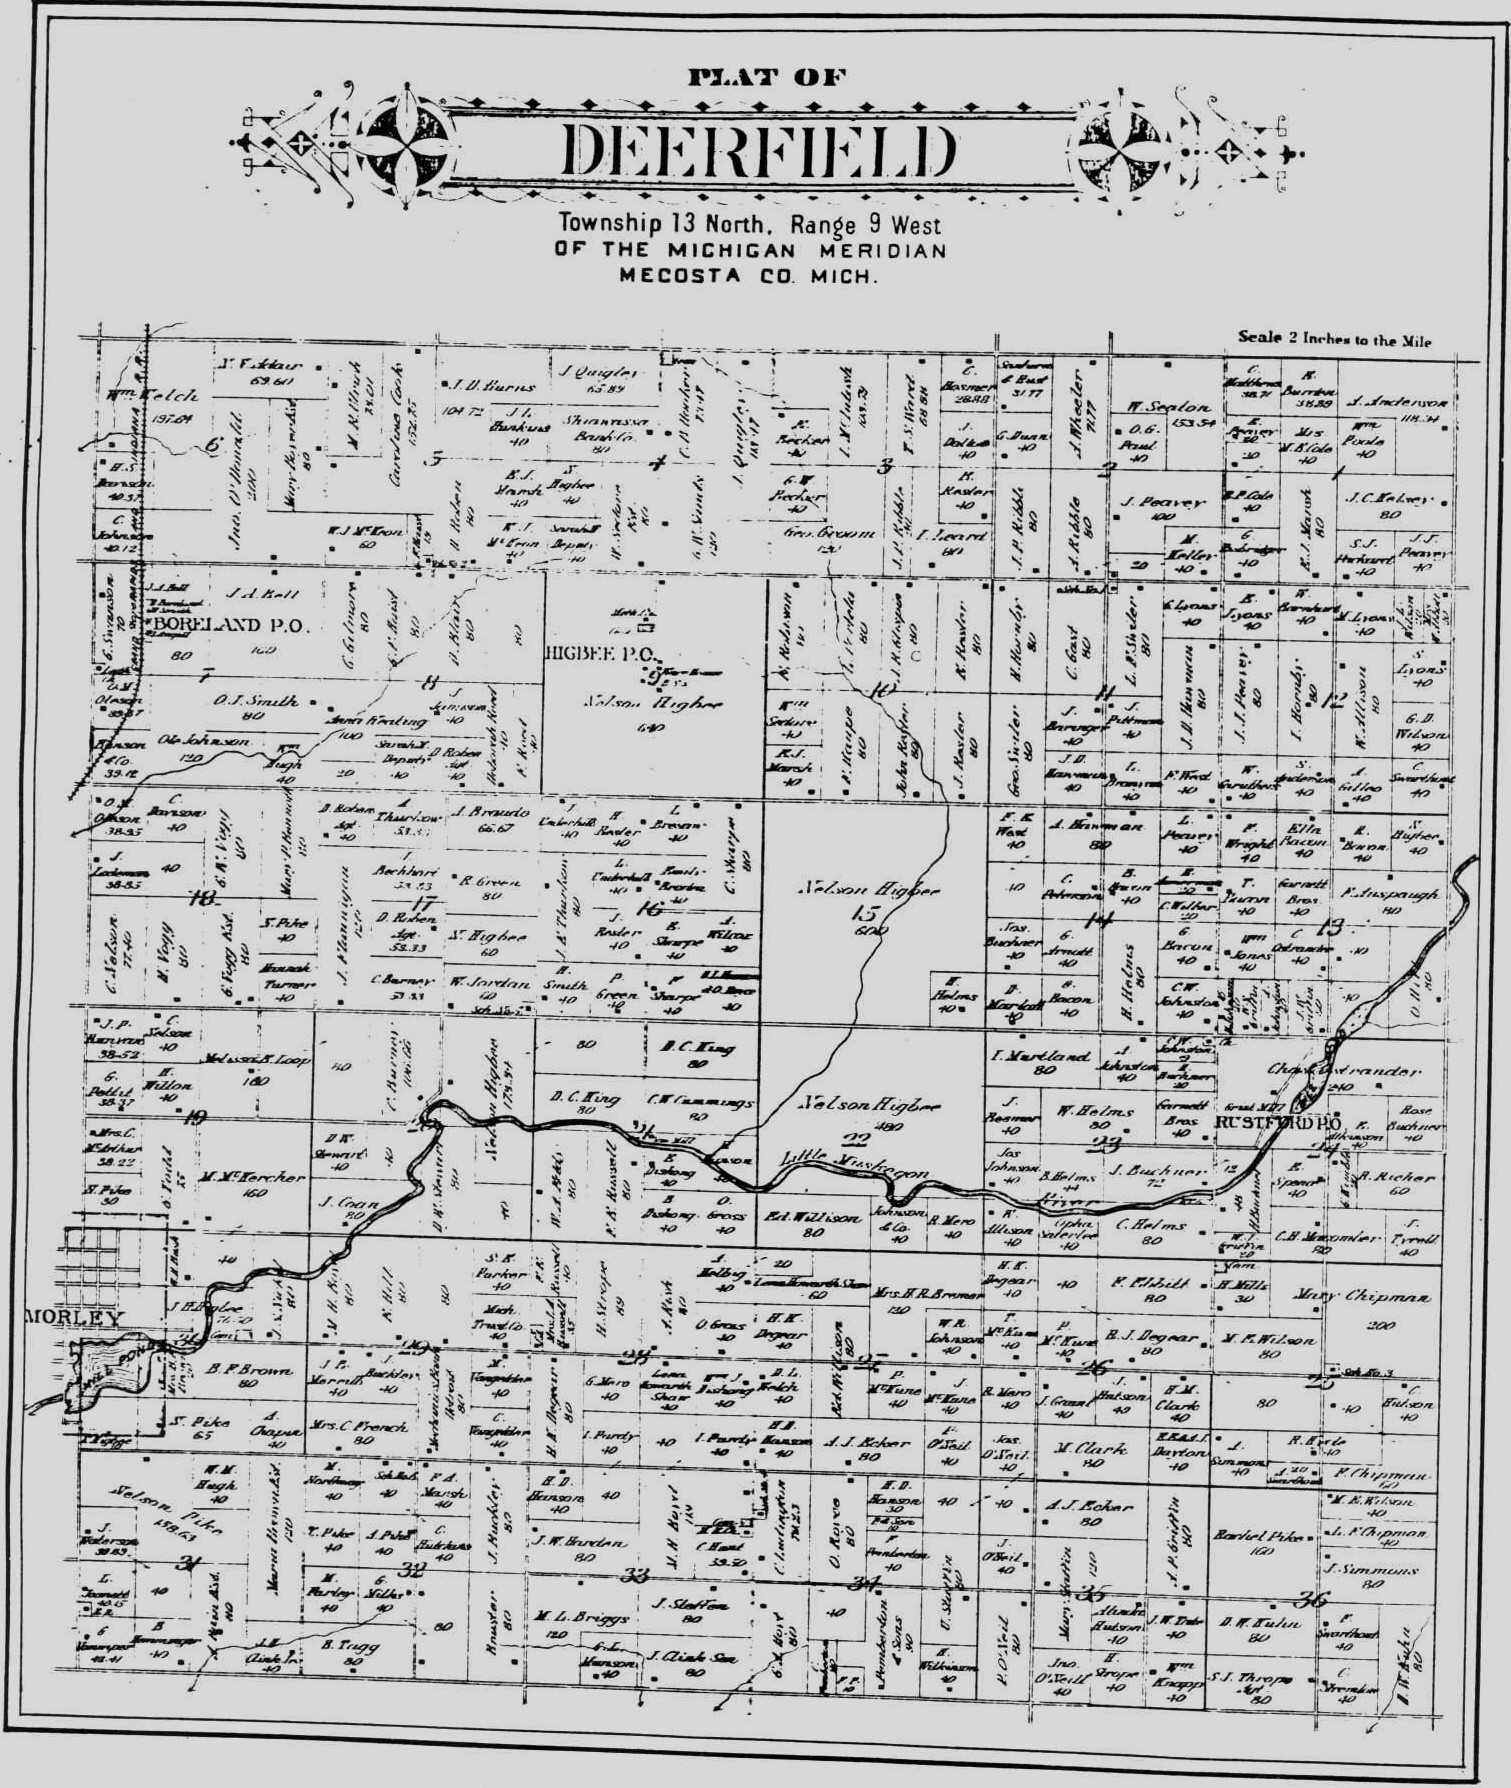 Deerfield Township Mecosta County Michigan Plat Map